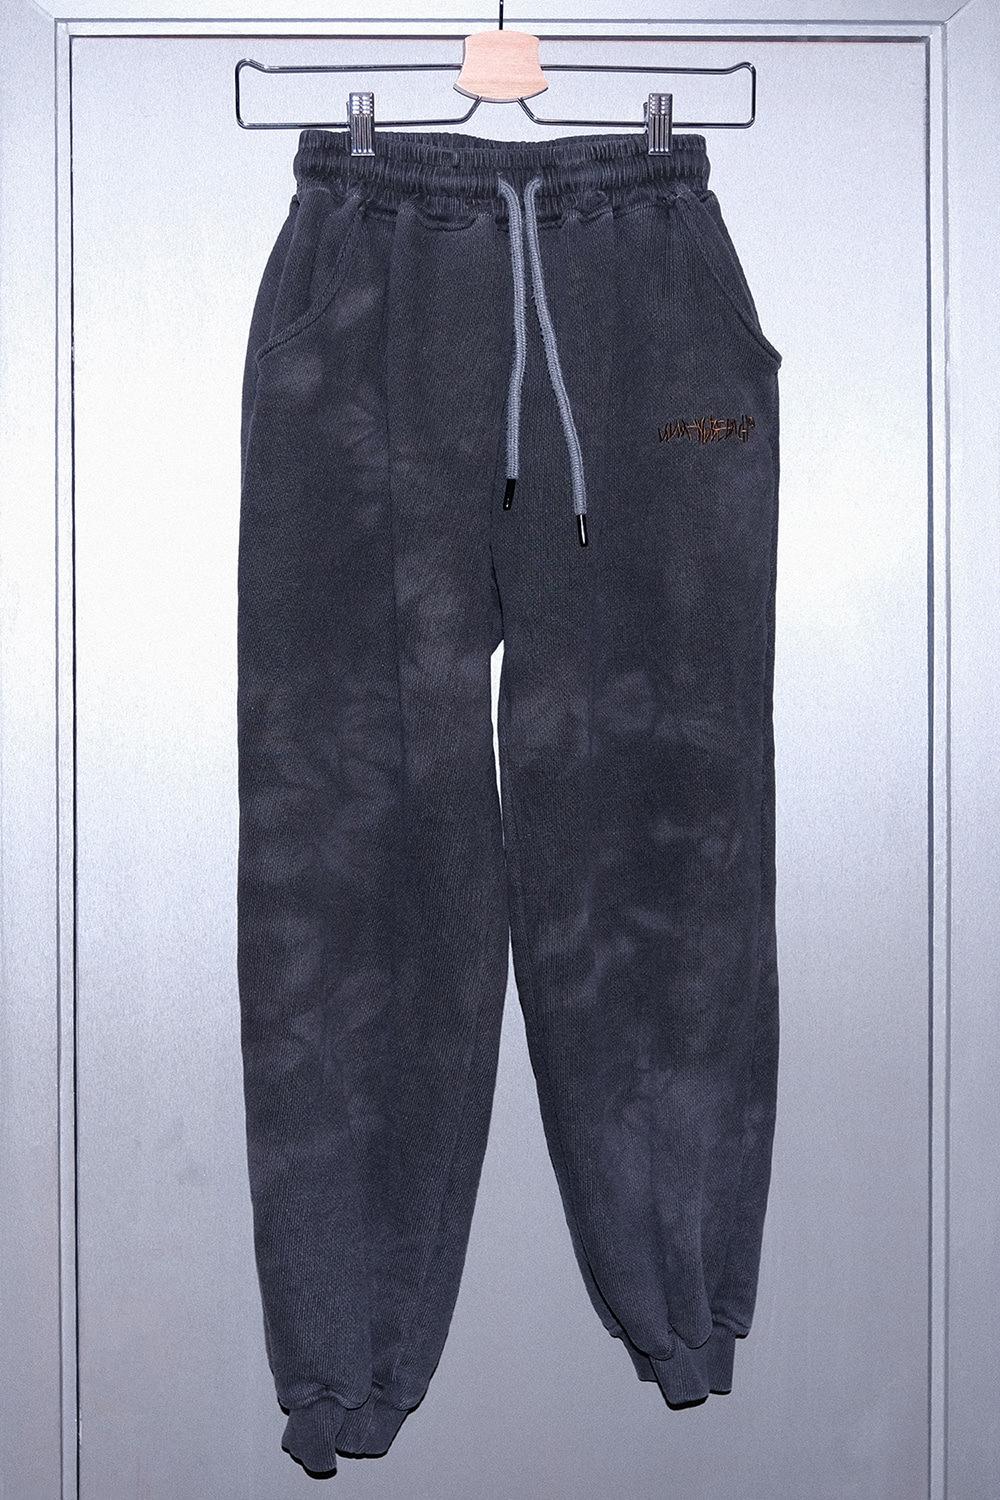 [I4P] WYBH Marbling Pants Dark Color